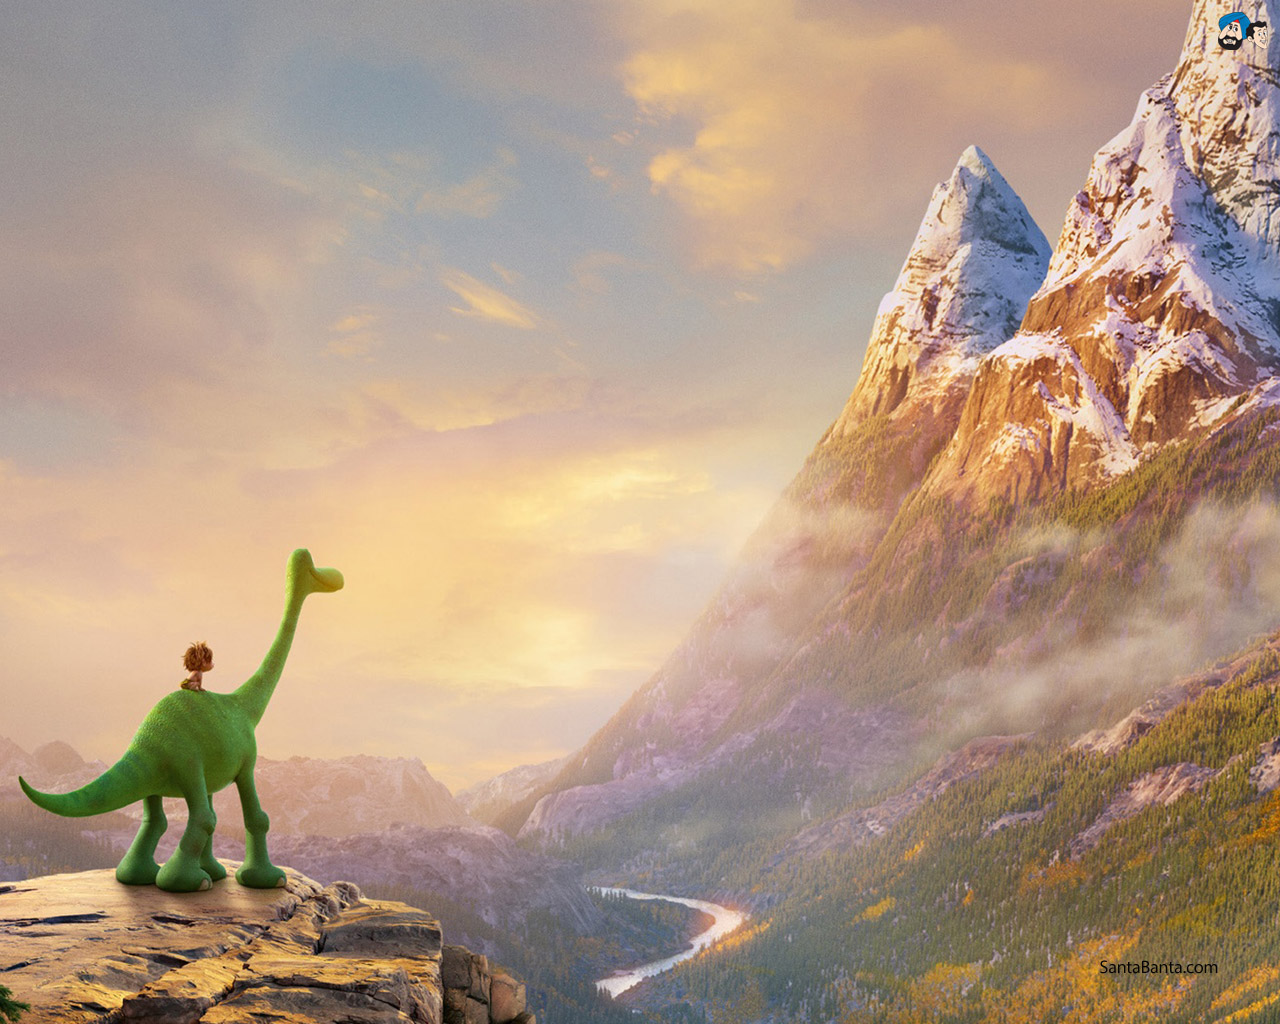 The Good Dinosaur Movie Wallpaper